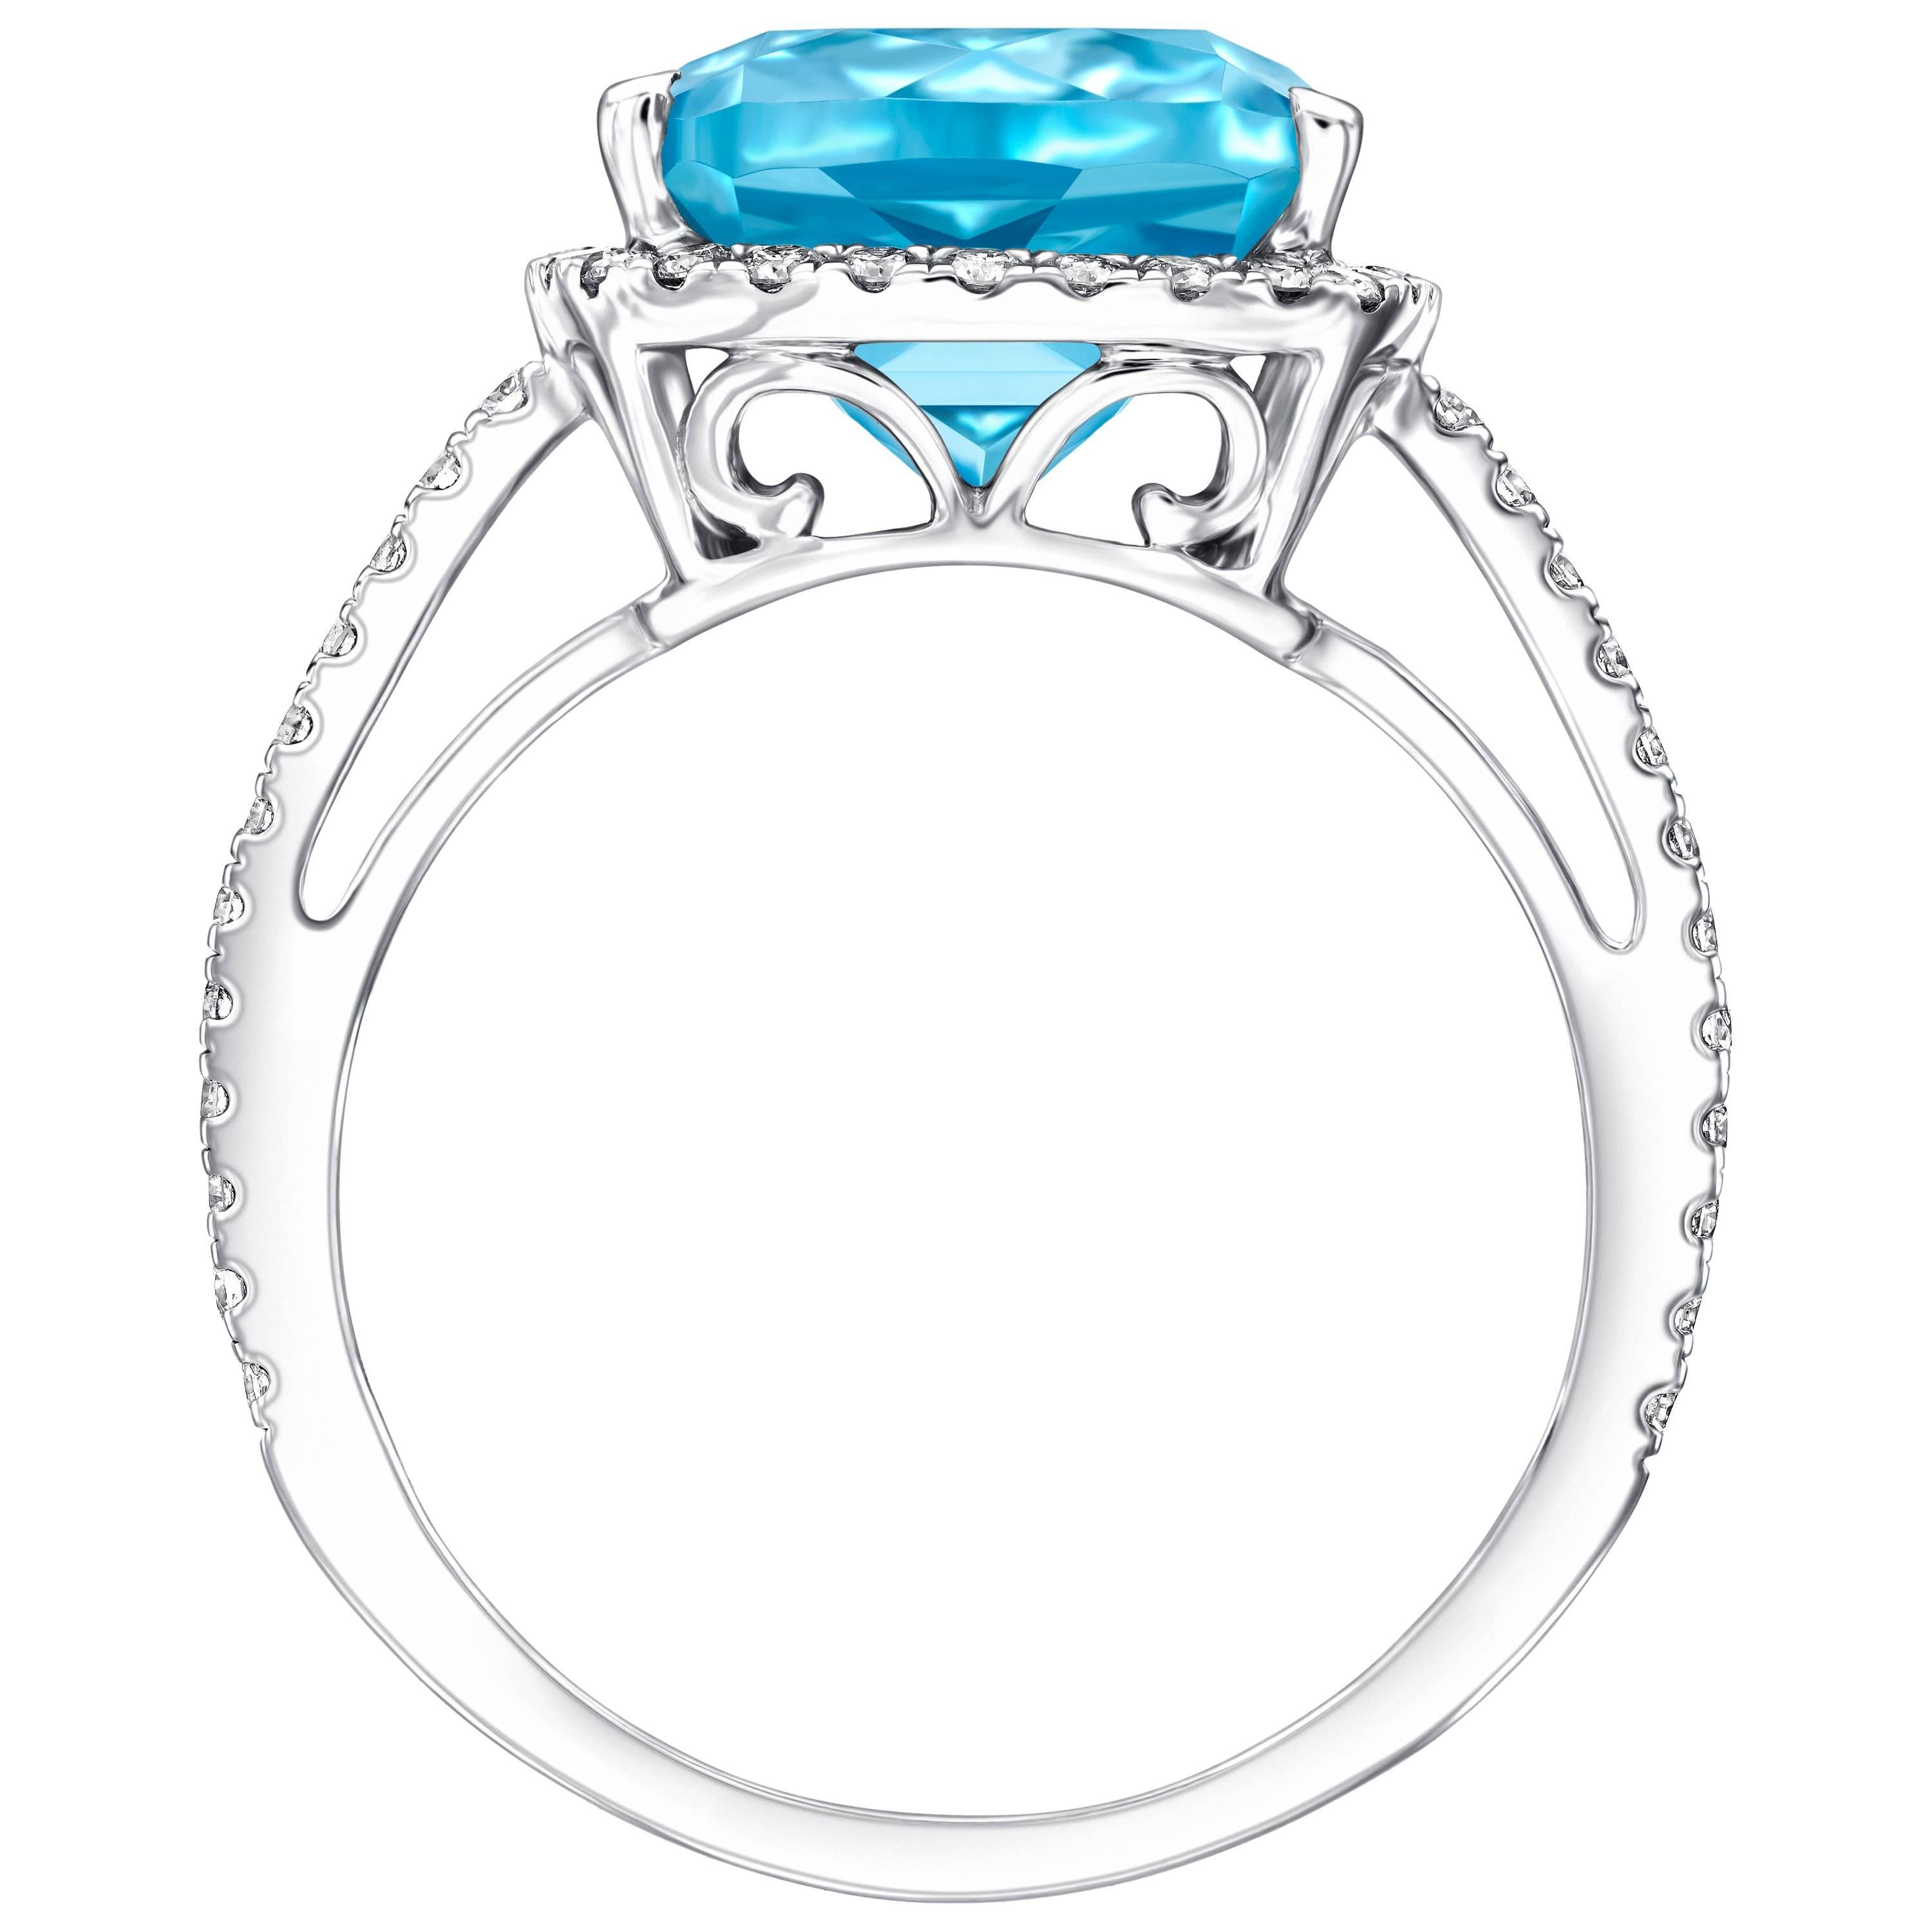 6 carat blue topaz ring